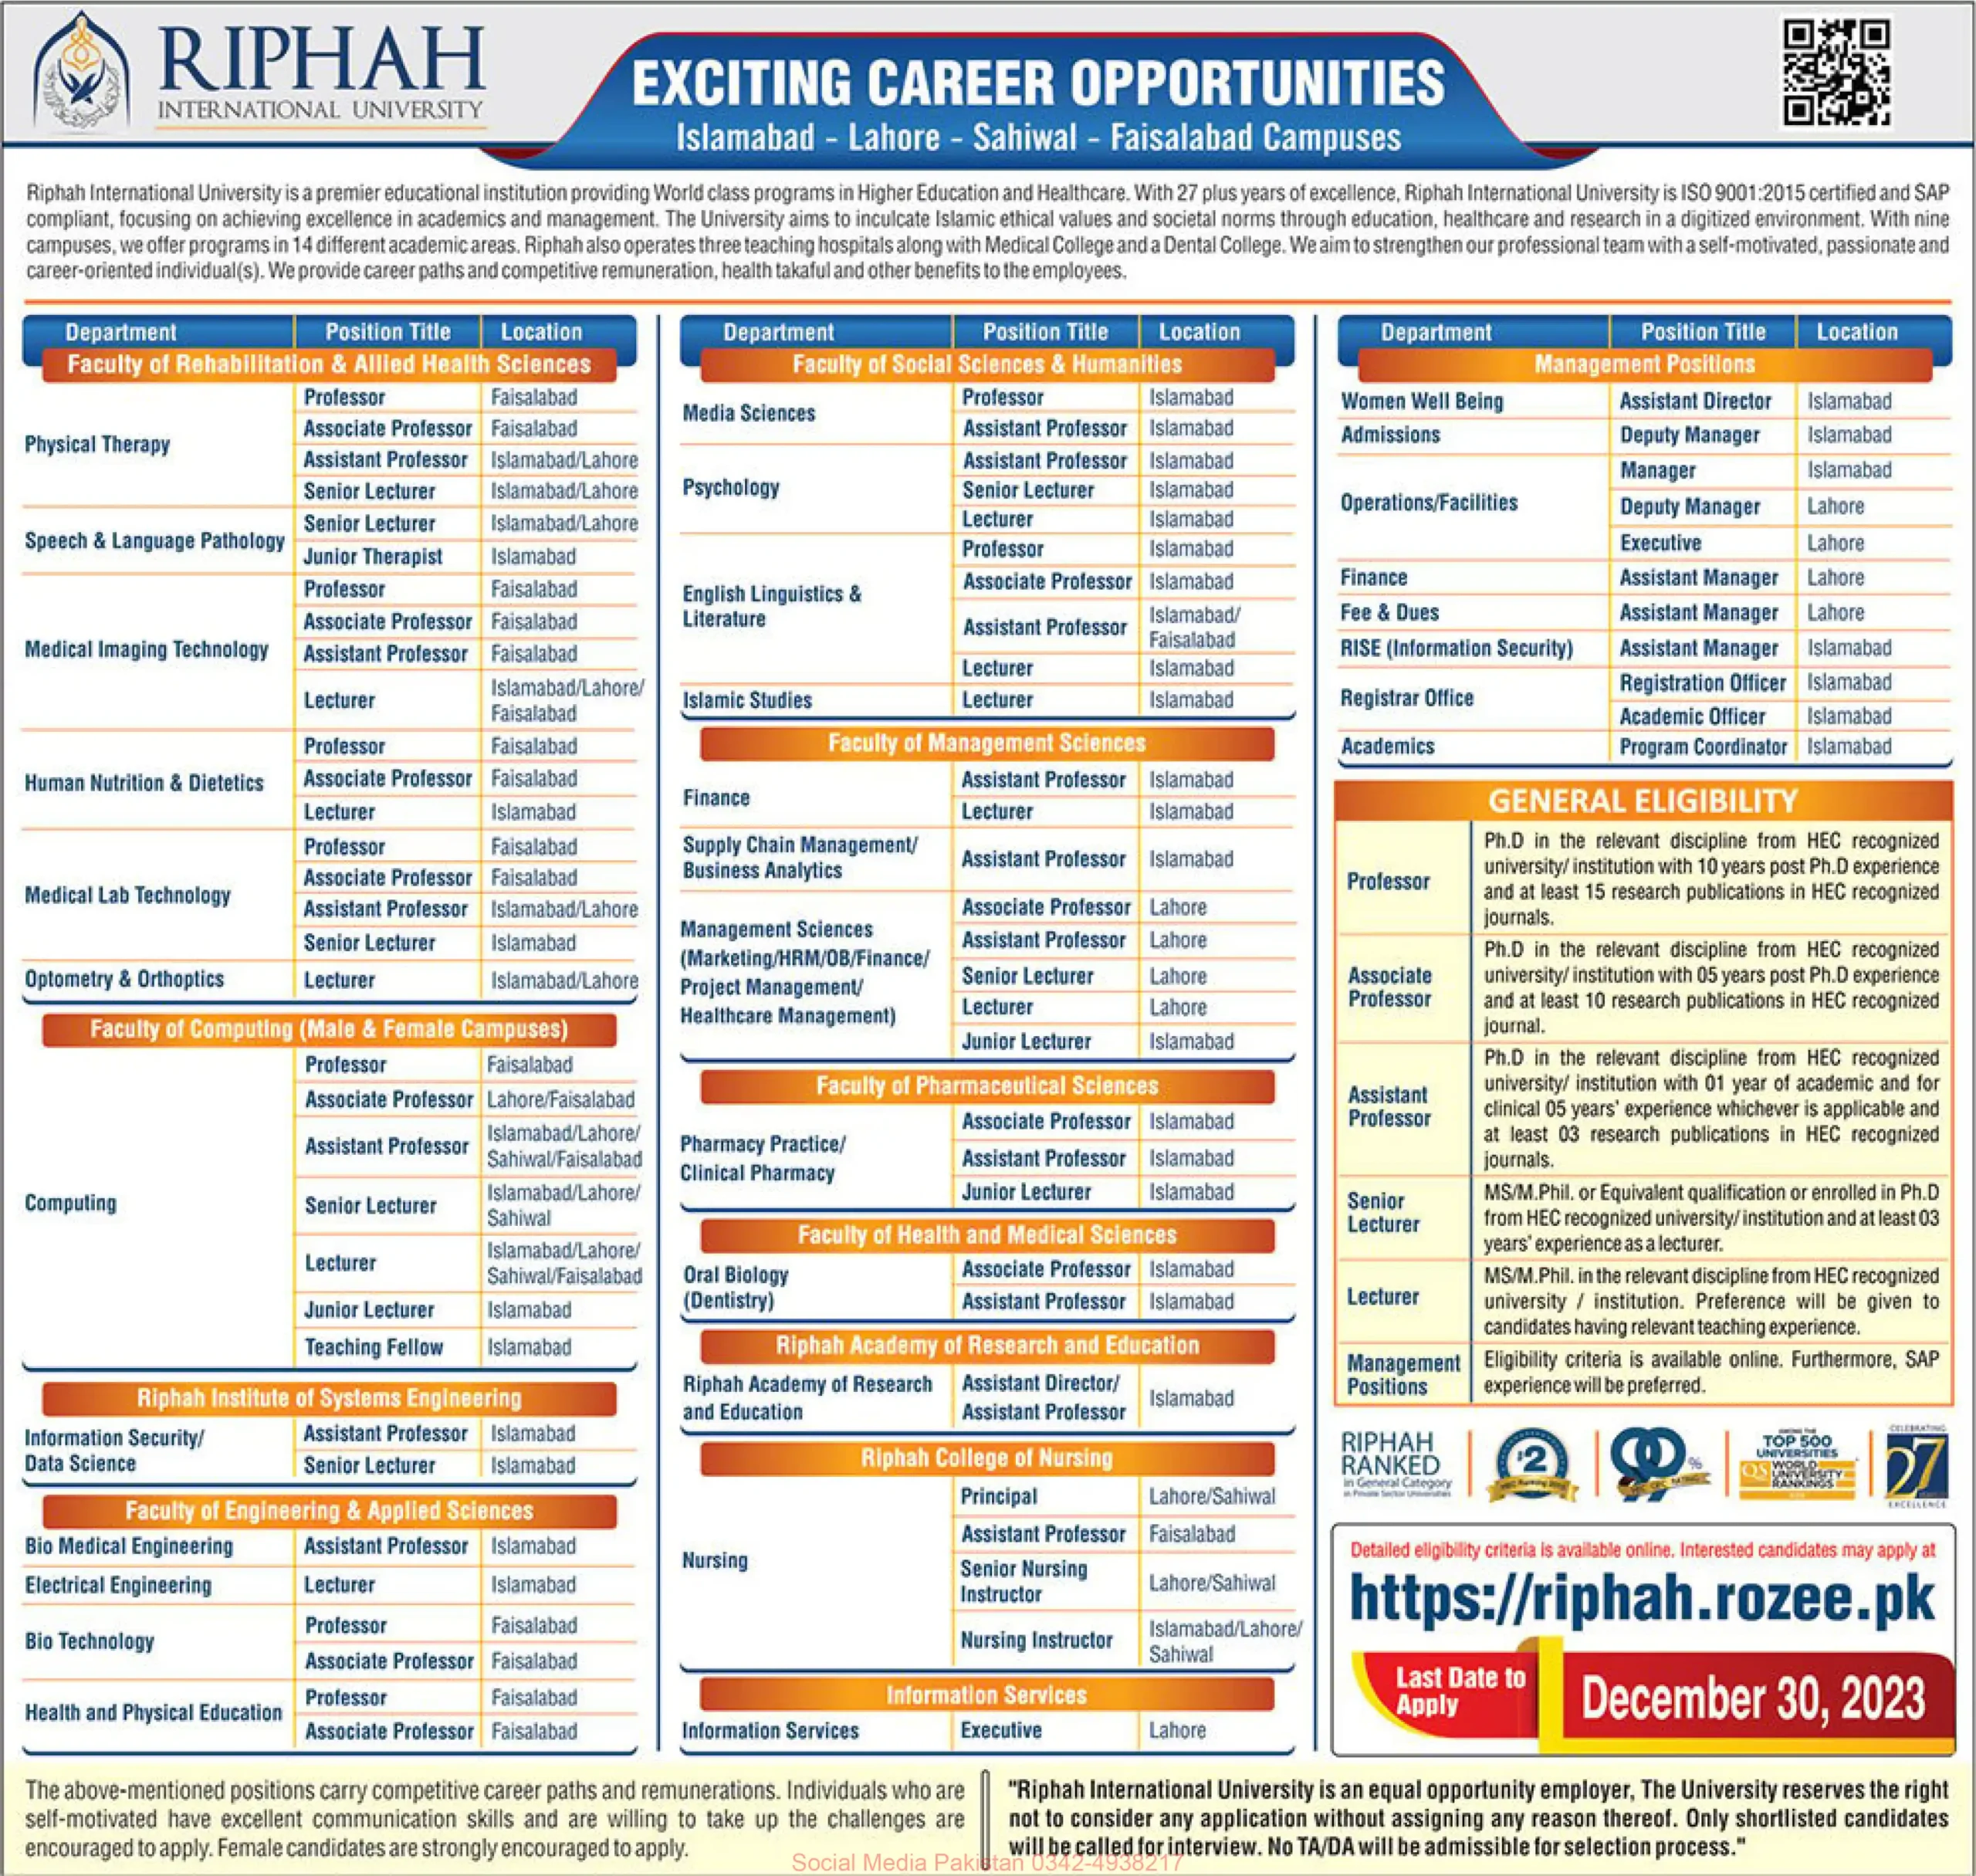 Riphah International University RIU Jobs 2023